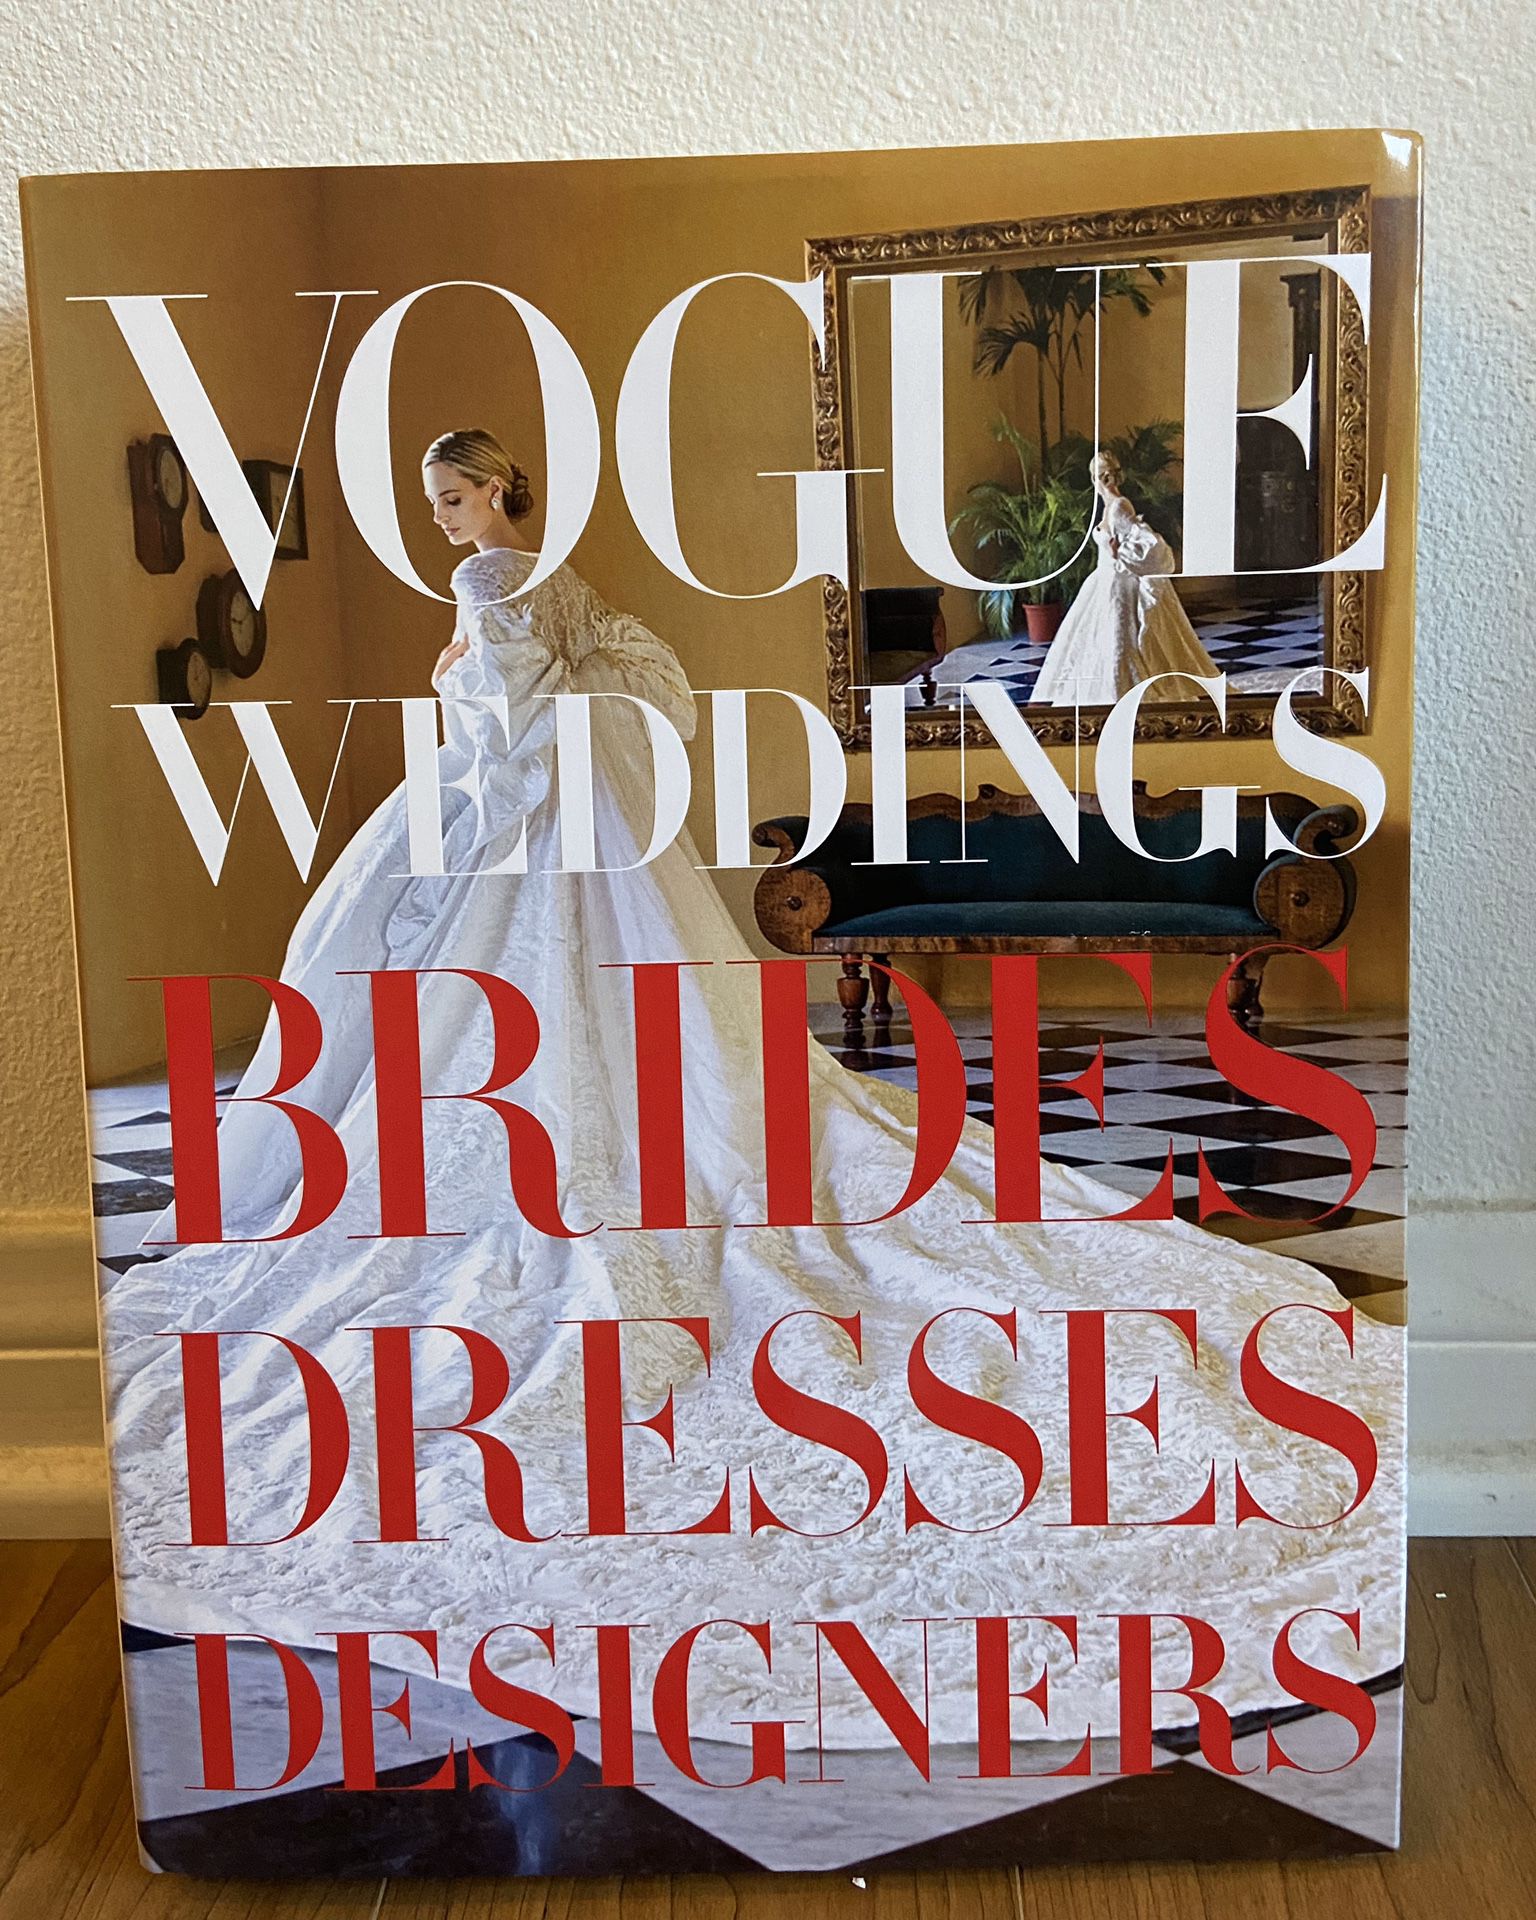 VOGUE Weddings Brides Dresses Designers